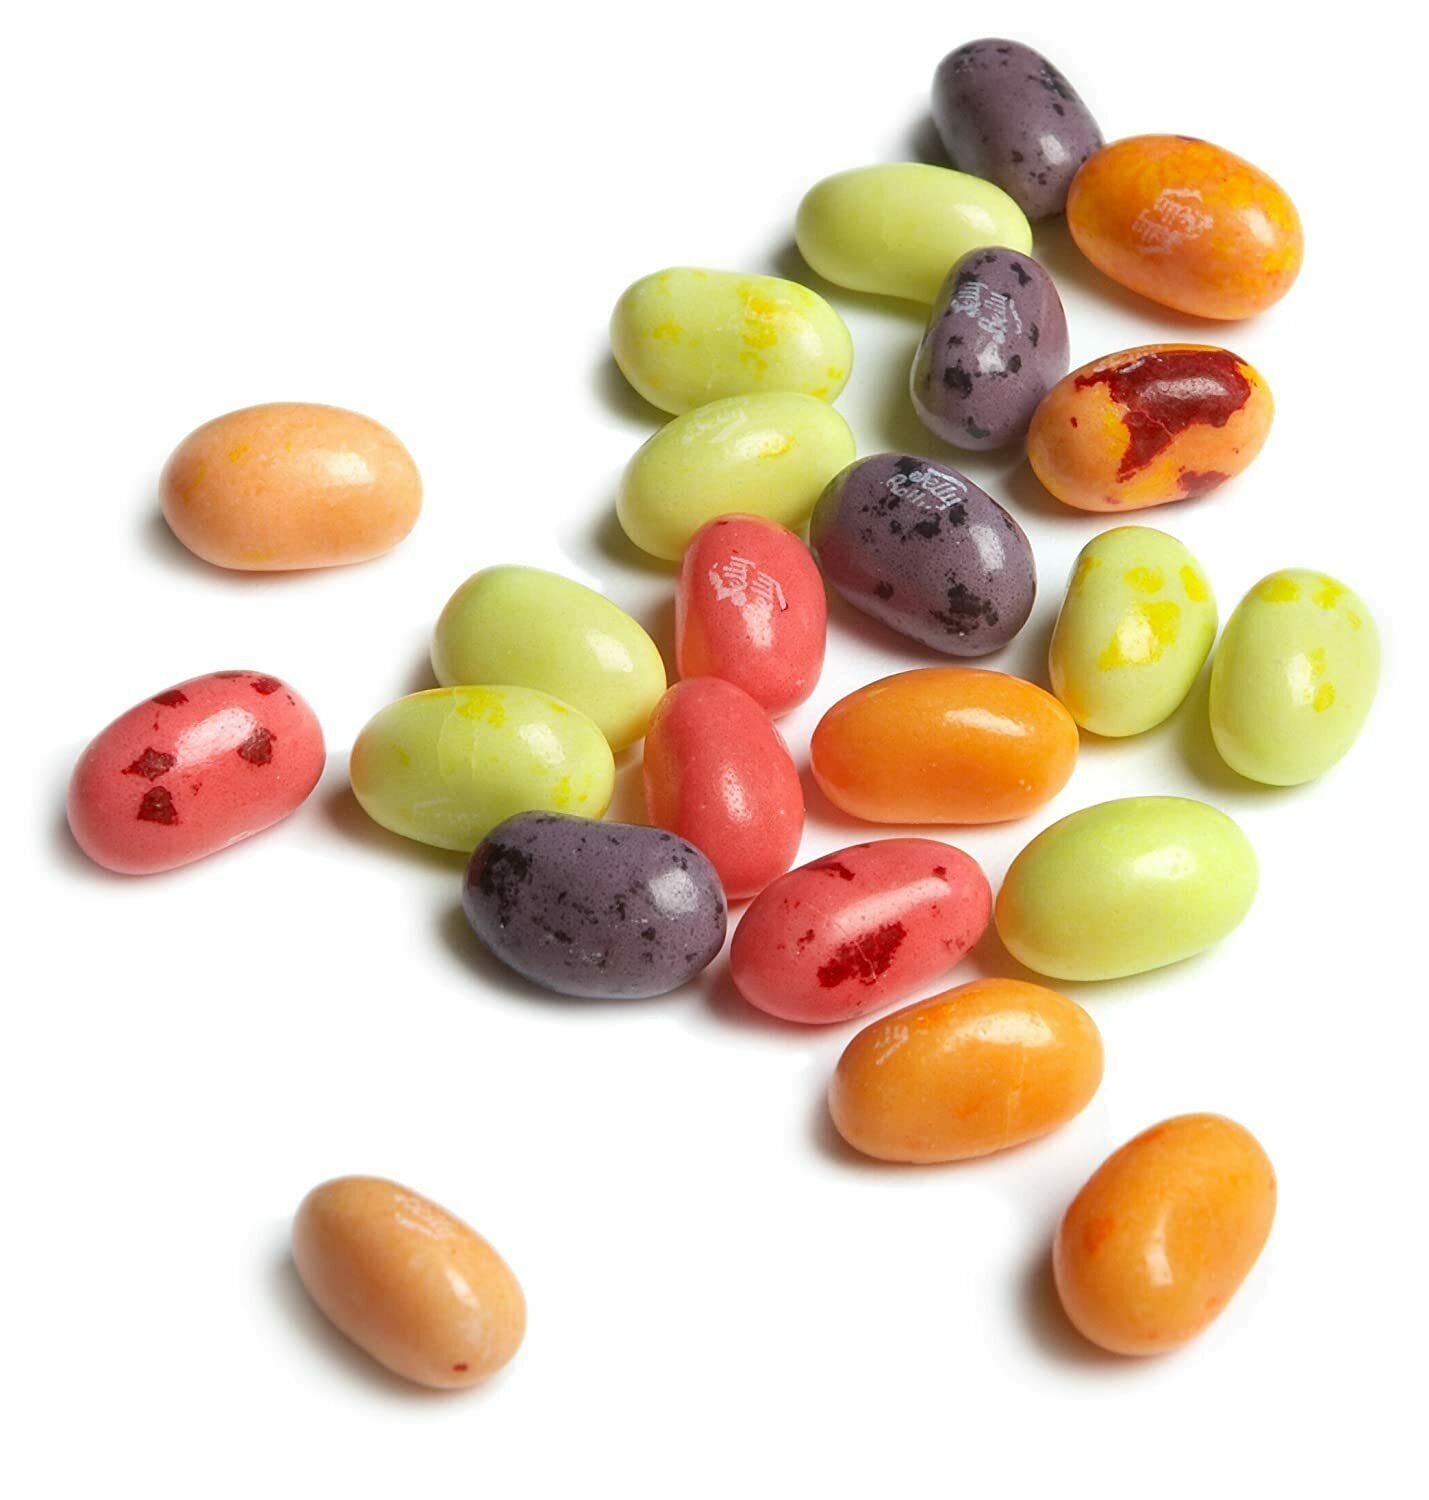 Jelly beanbrainss